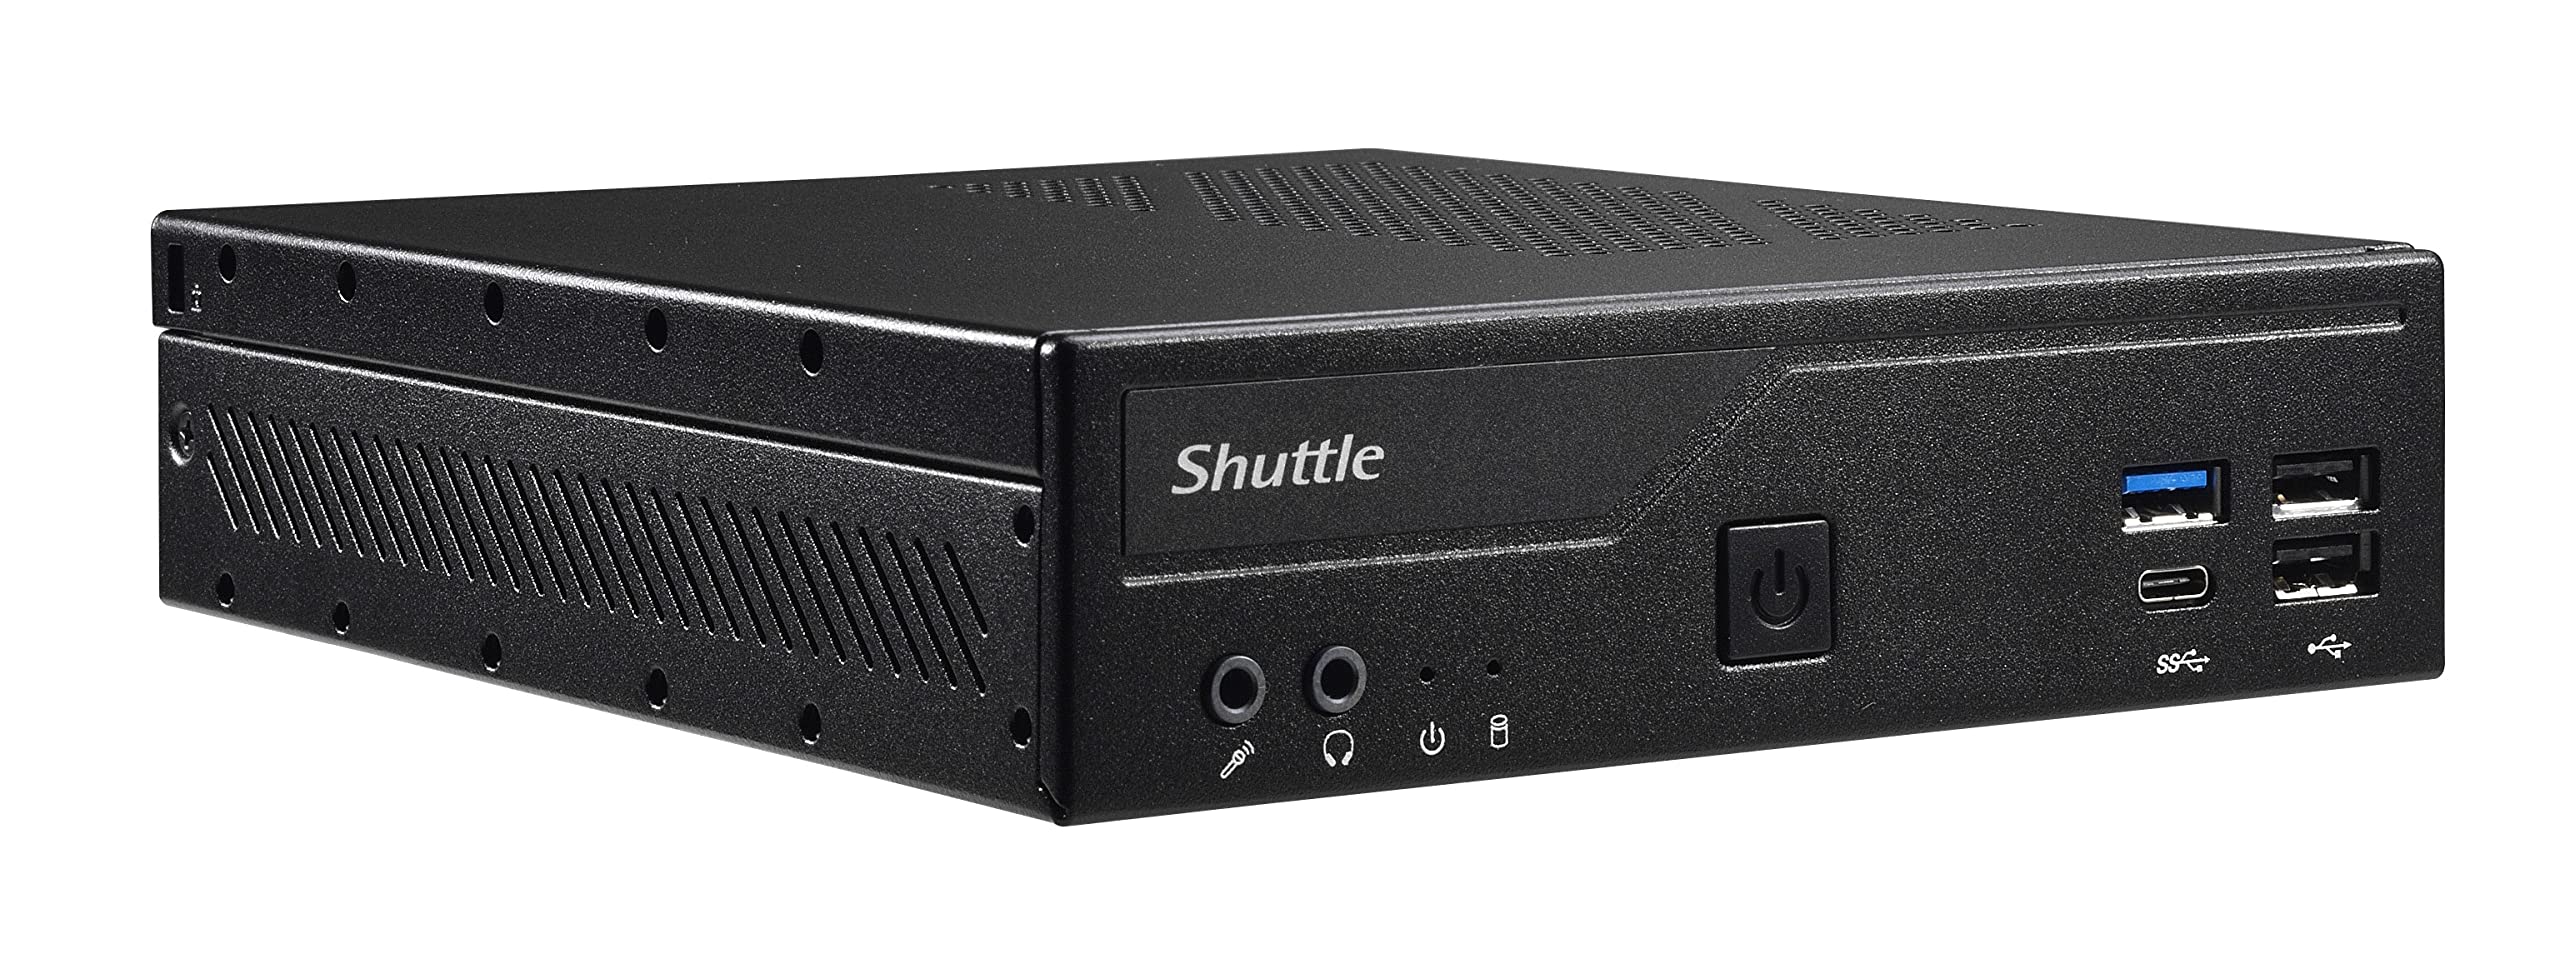 Shuttle XPC Slim DH610 Mini Barebone PC Intel H610 Support 65W Cometlake CPU No Ram No HDD/SSD No CPU No OS